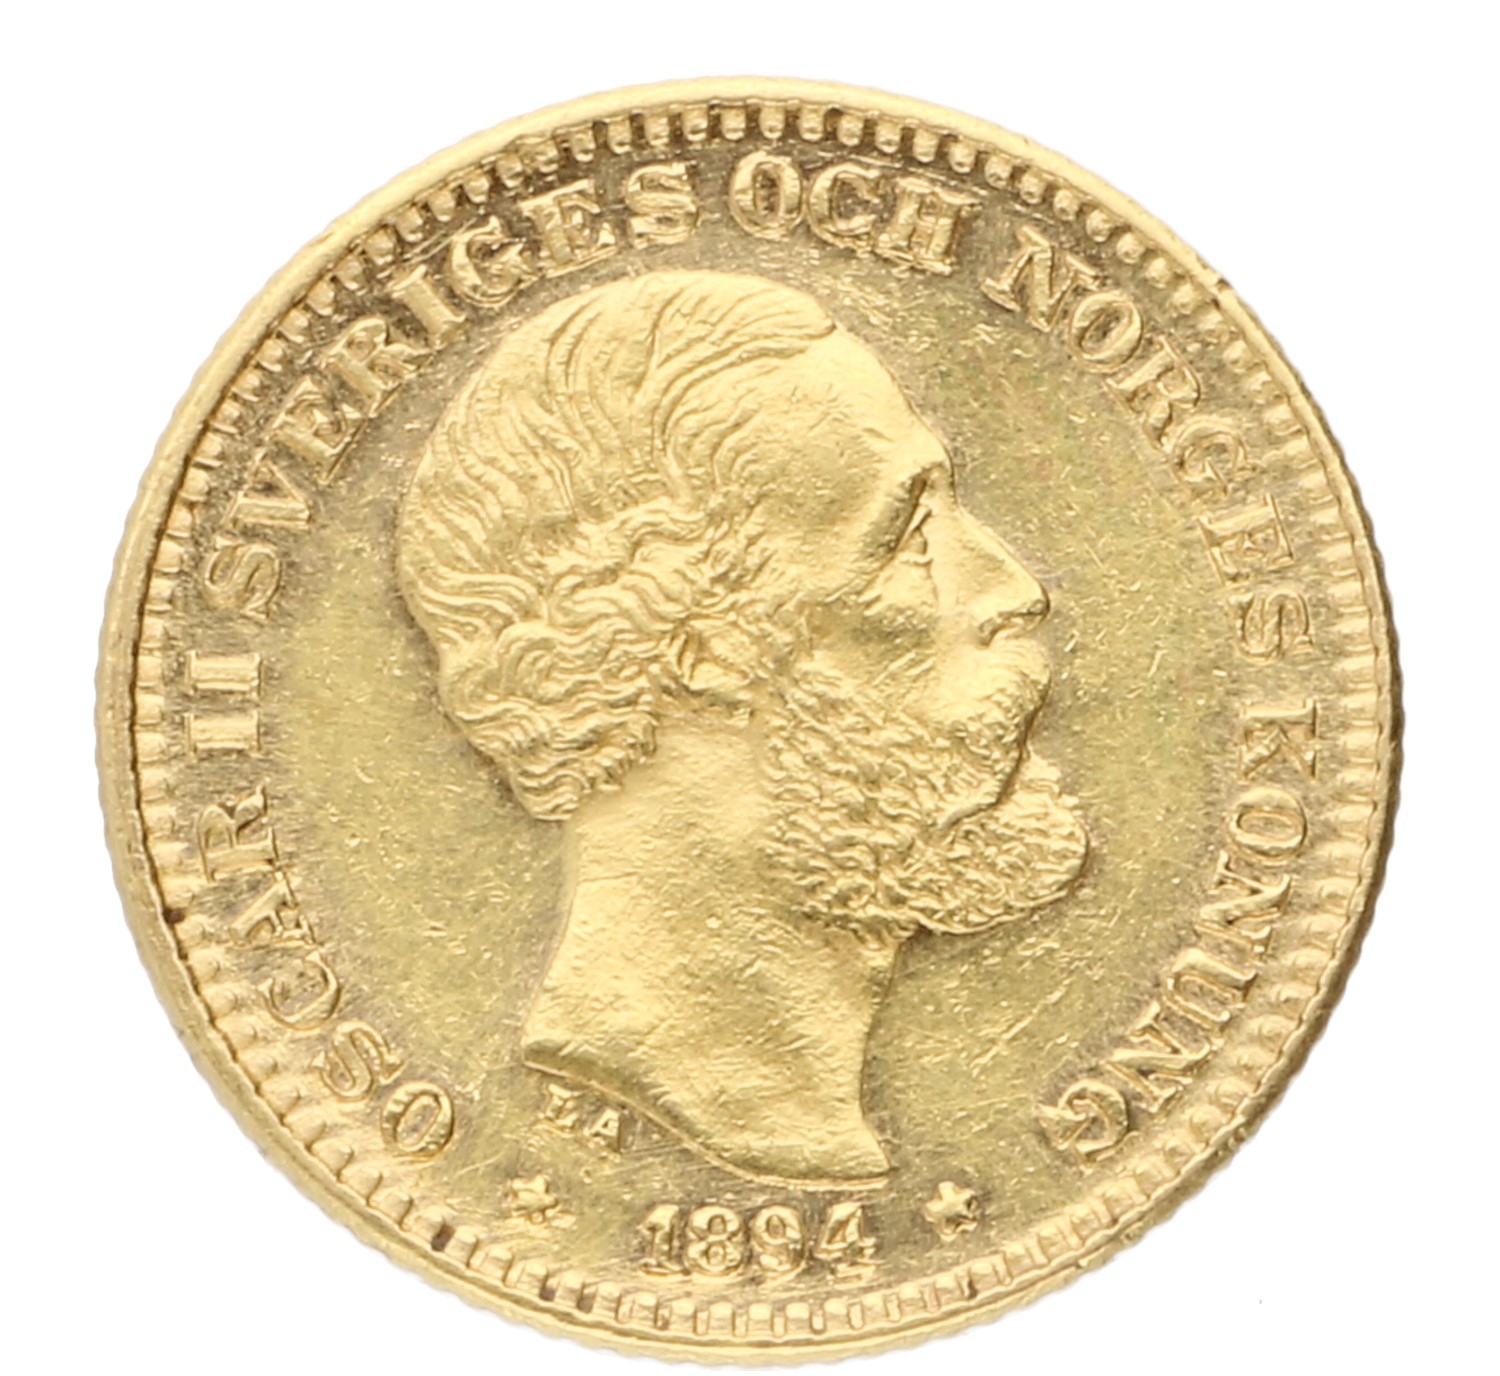 10 Kronor - Sweden - 1894